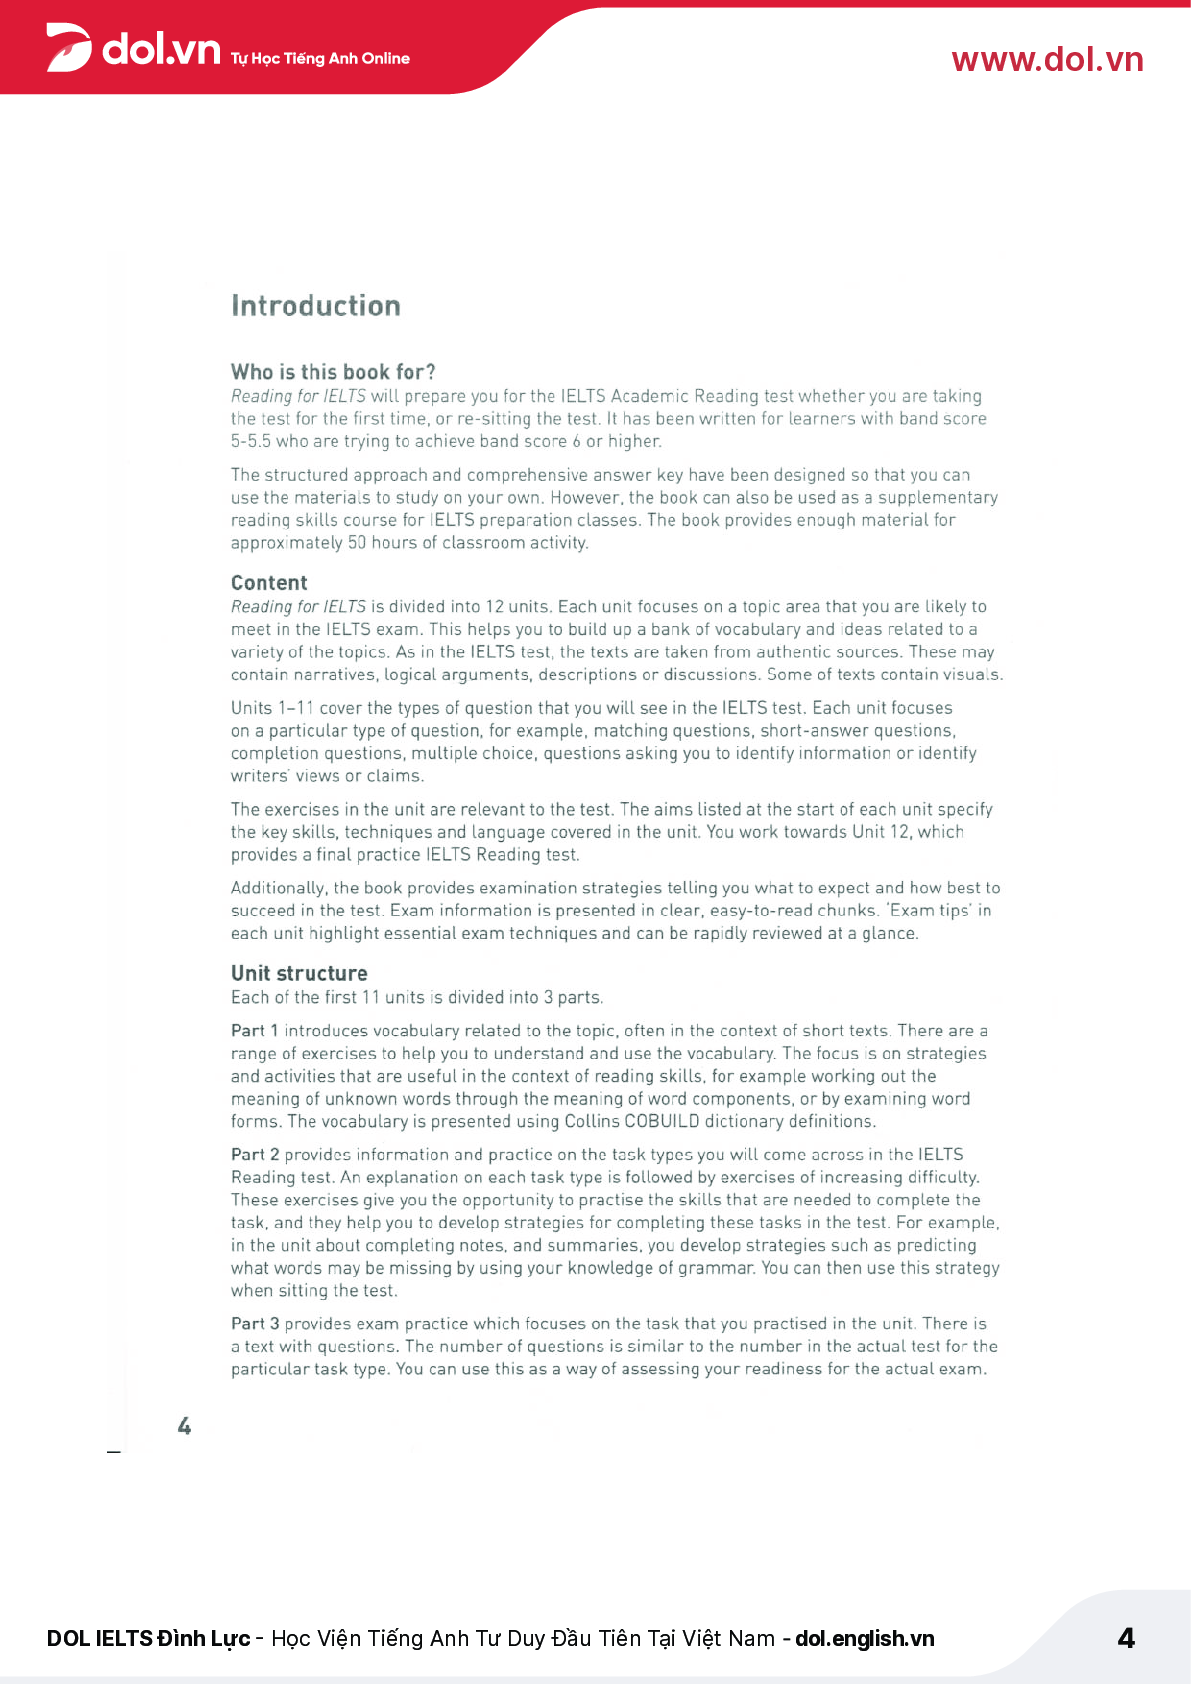 Sách Collins Reading for IELTS pdf | Xem online, tải PDF miễn phí (trang 4)